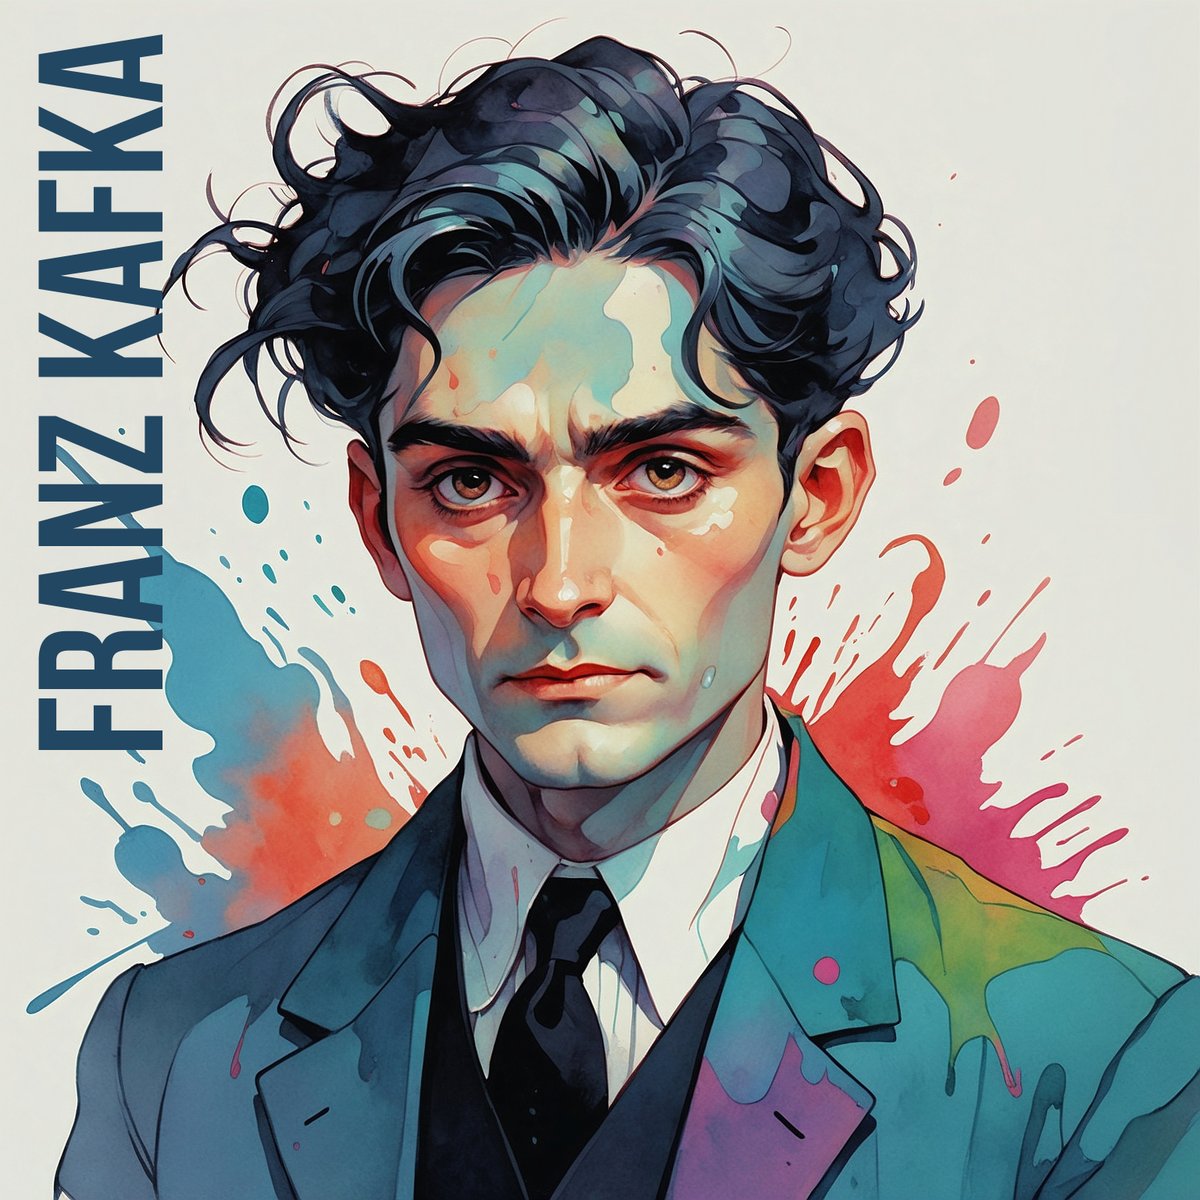 Franz Kafka
#franzkafka #kafka #author #artcommunity #authors #illustration #illustrator #booklover #famousportraits #philosophy
#aiartcommunity #famous #publishing #bookphotography #bookpublishing #bookpublisher #philosopher #cartoon #portrait